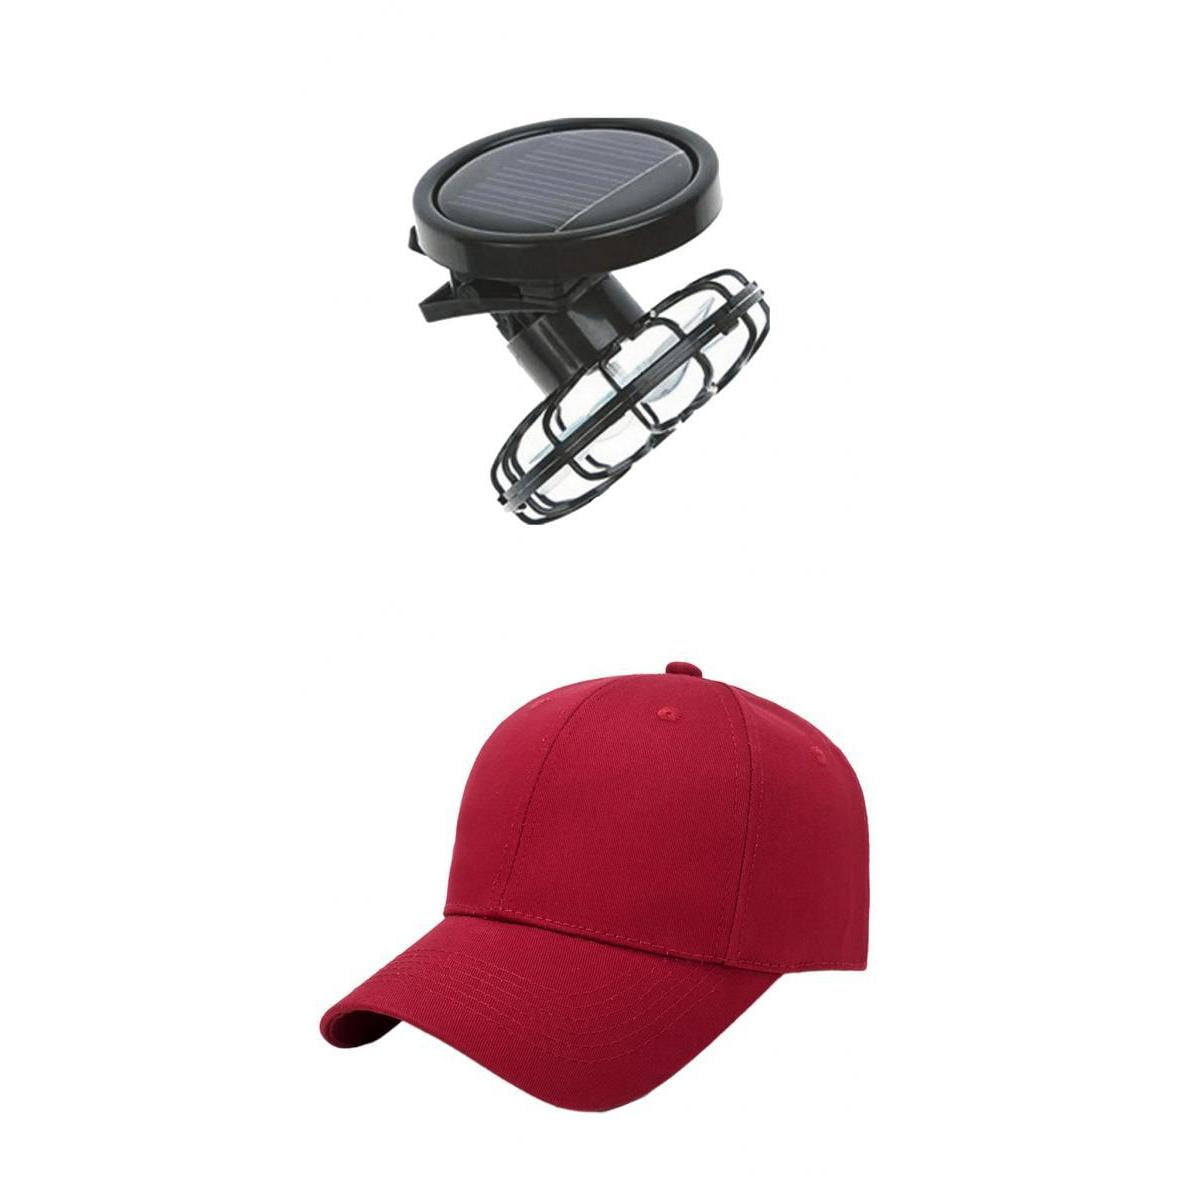 dark Blu Camping Hat Solar Powered Air Fan Cooled Baseball Hat with Solar Powered Fan Cooling Hats Traveling 